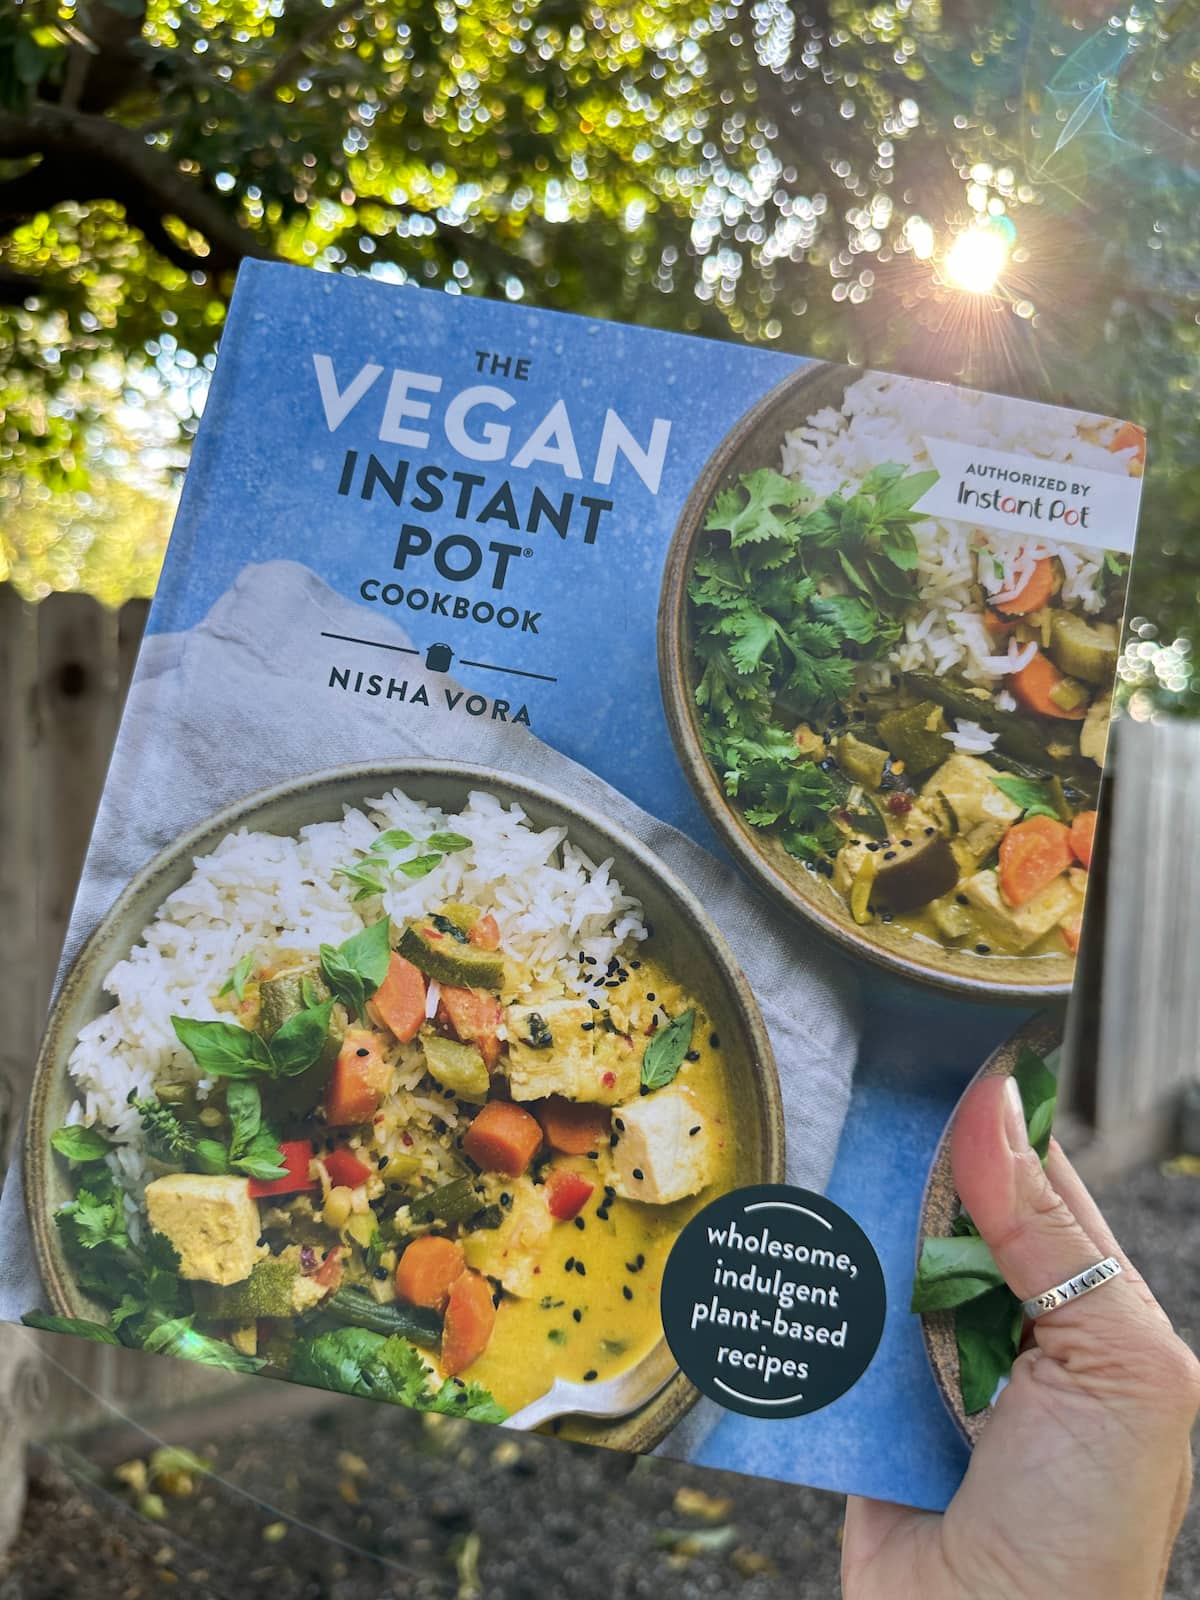 Cover art for the Vegan Instant Pot Cookbook by Nisha Vora.